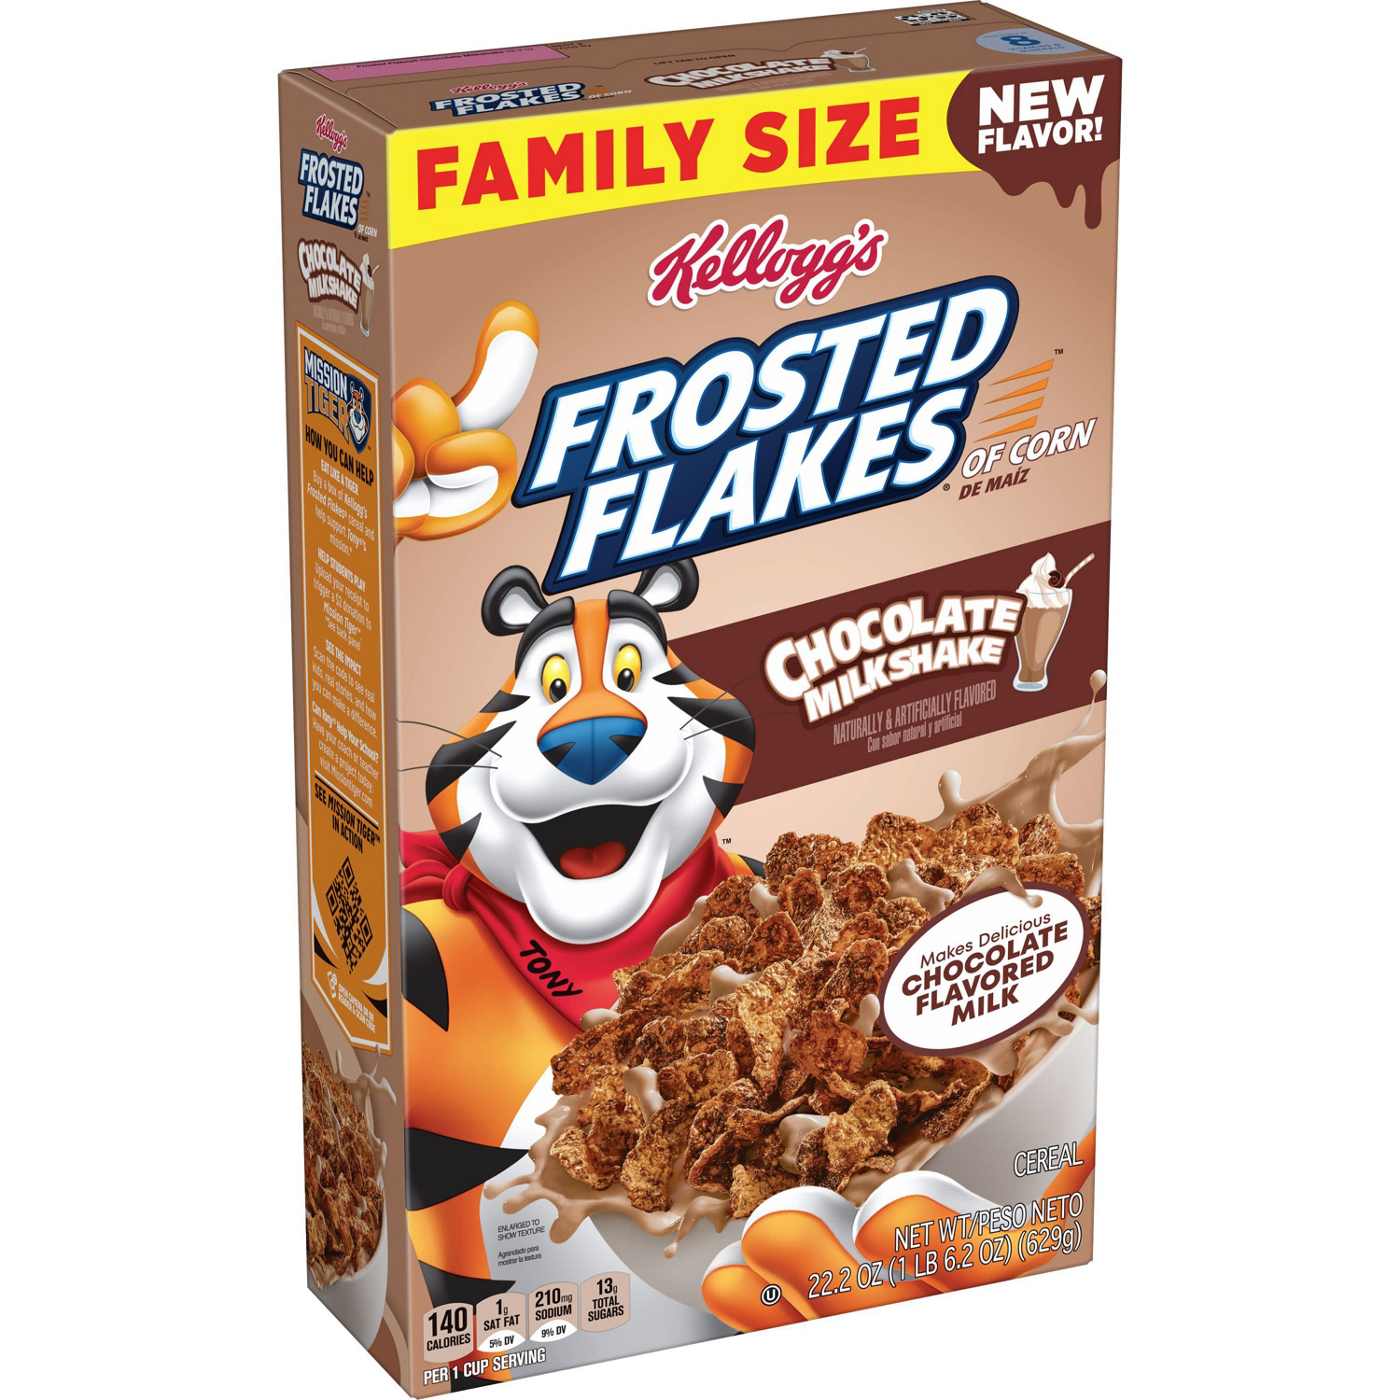 Kellogg's Frosted Flakes Chocolate Milkshake Family Size; image 1 of 2